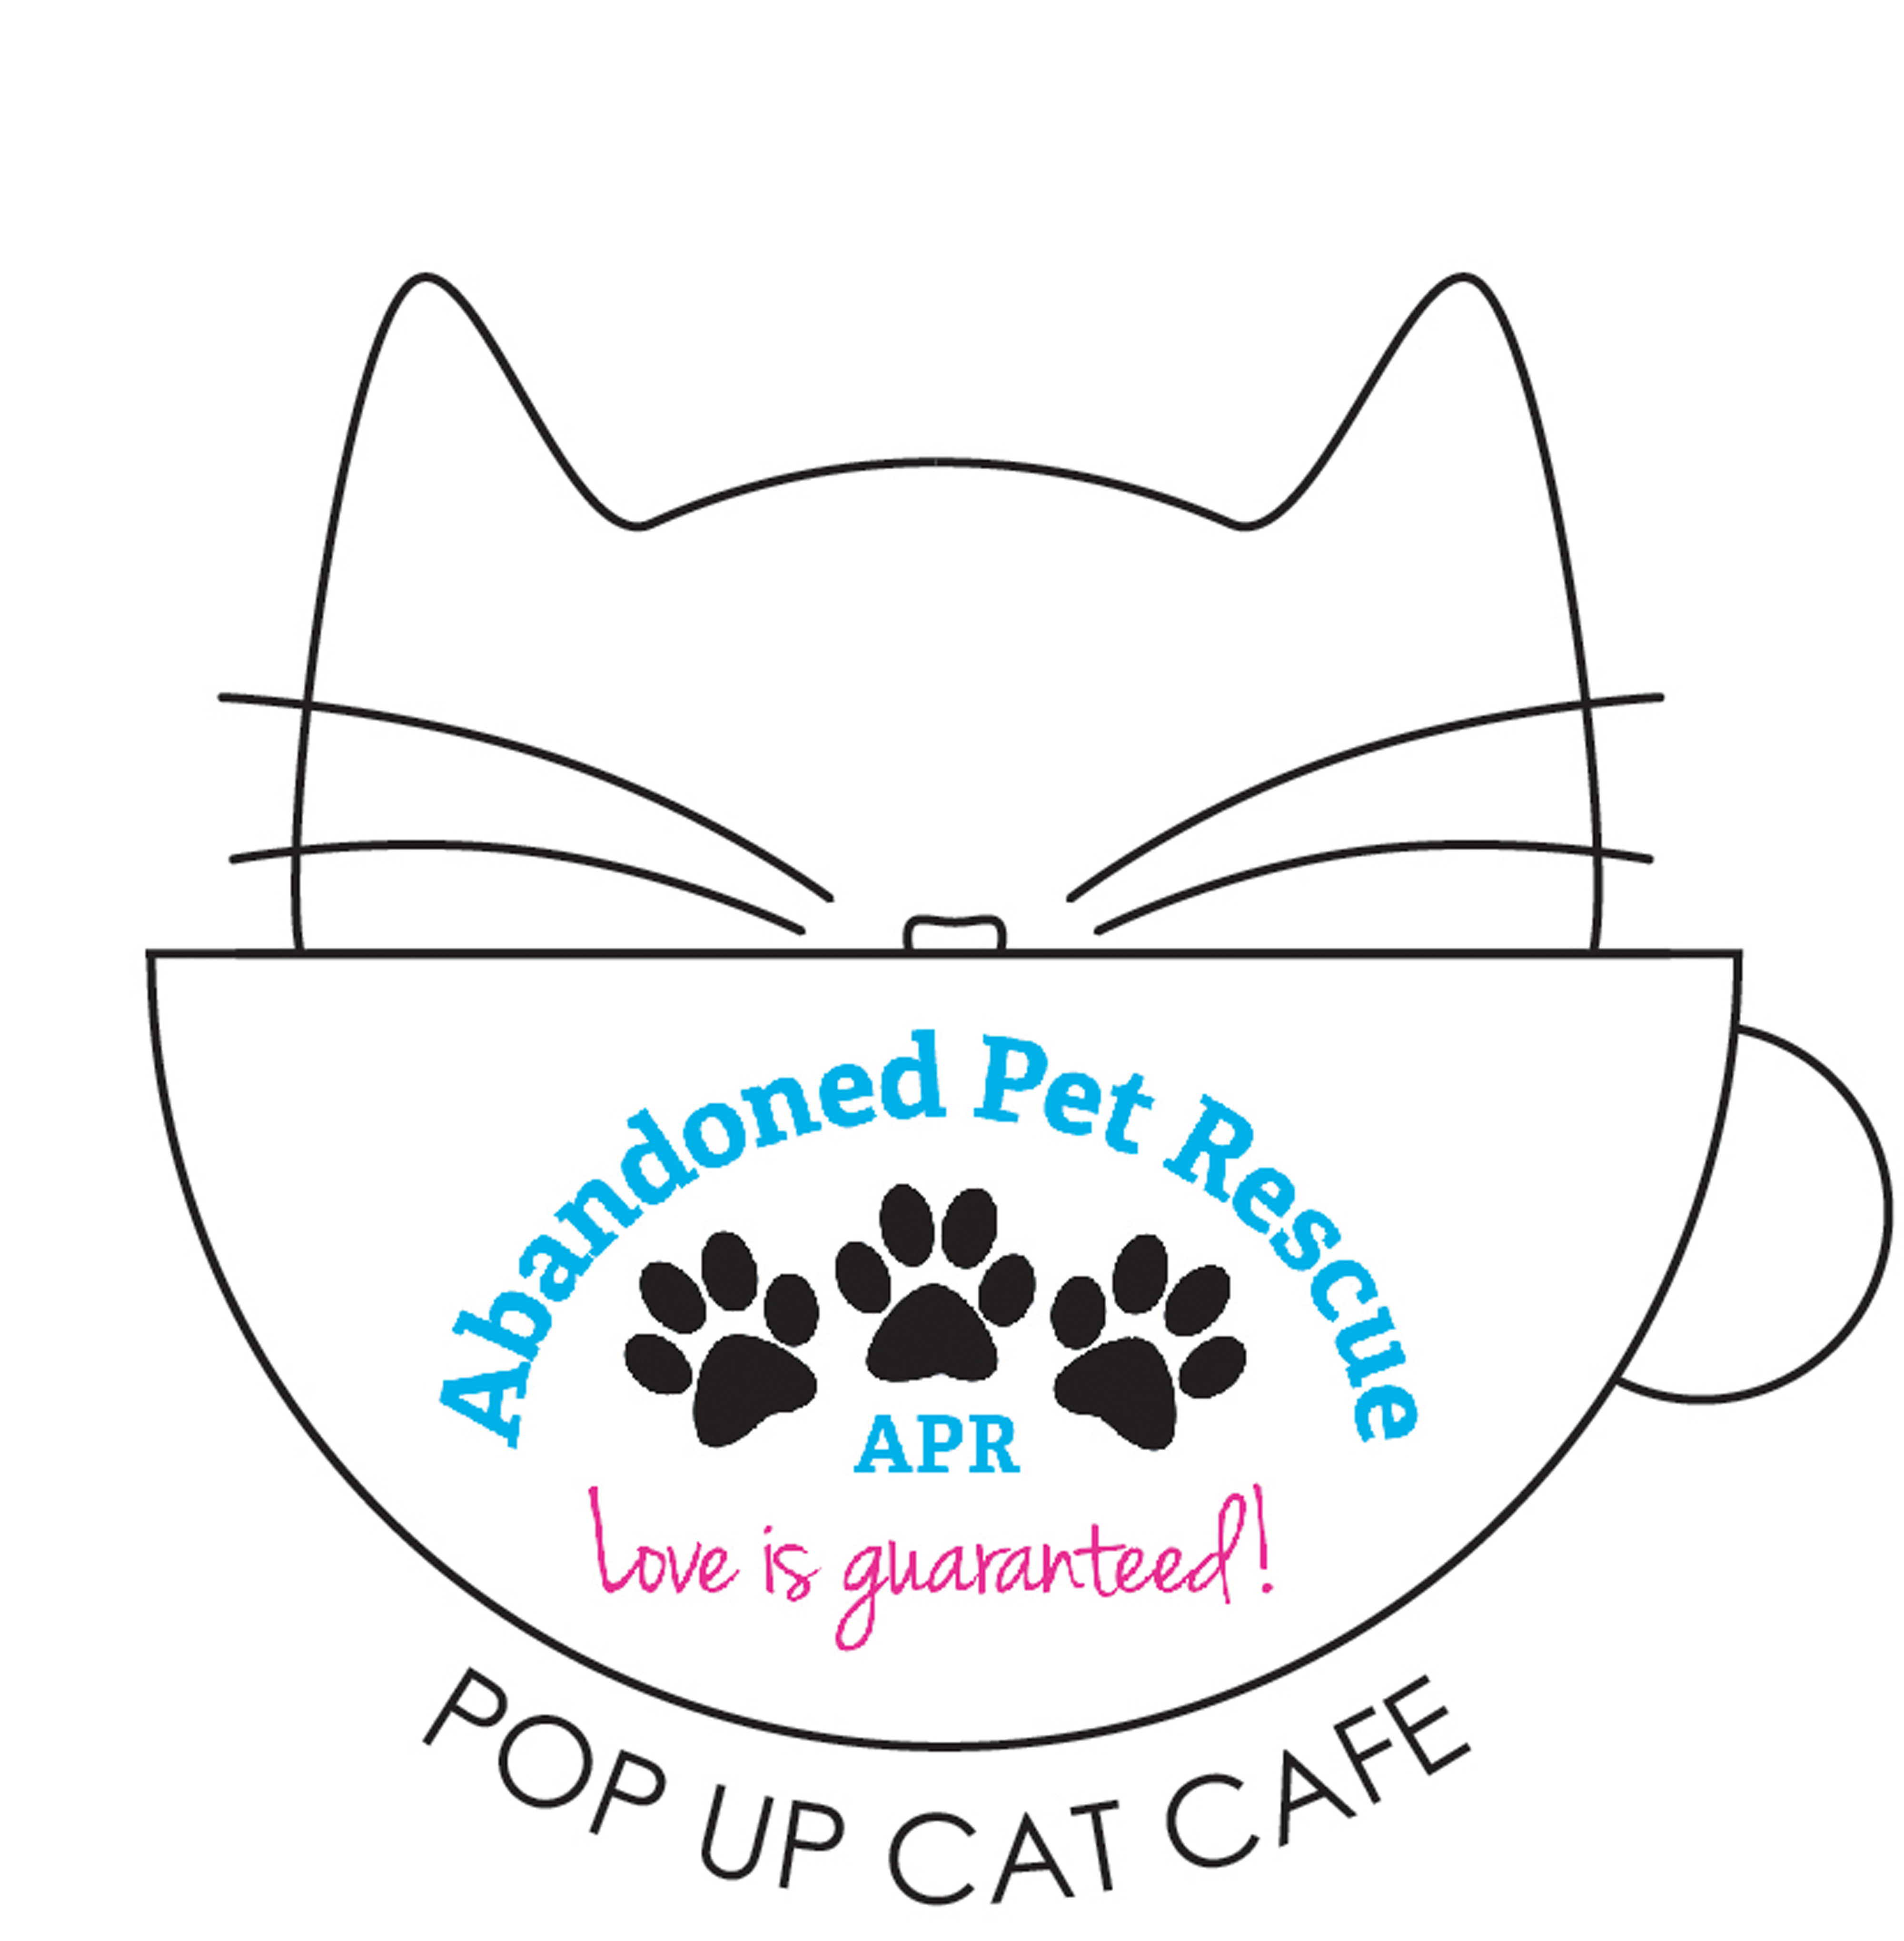 Pop Up Cat Cafe 6/1/19 @ Blanco Y Blanco Arts | Fort Lauderdale | Florida | United States